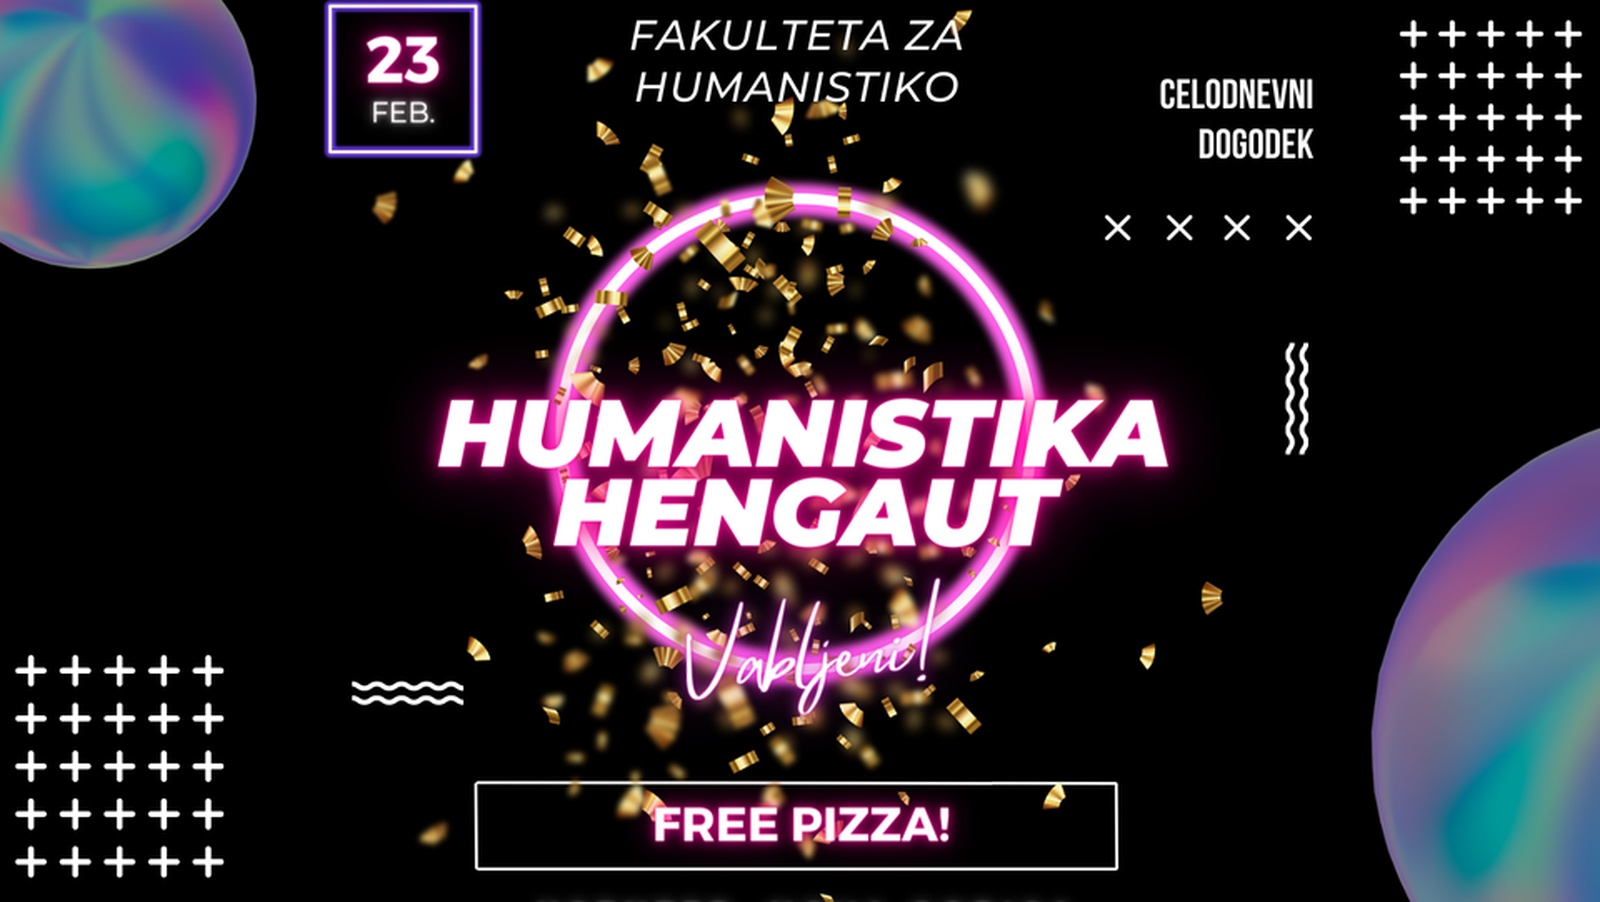 Humanistika hengaut in Dialogi_čez_